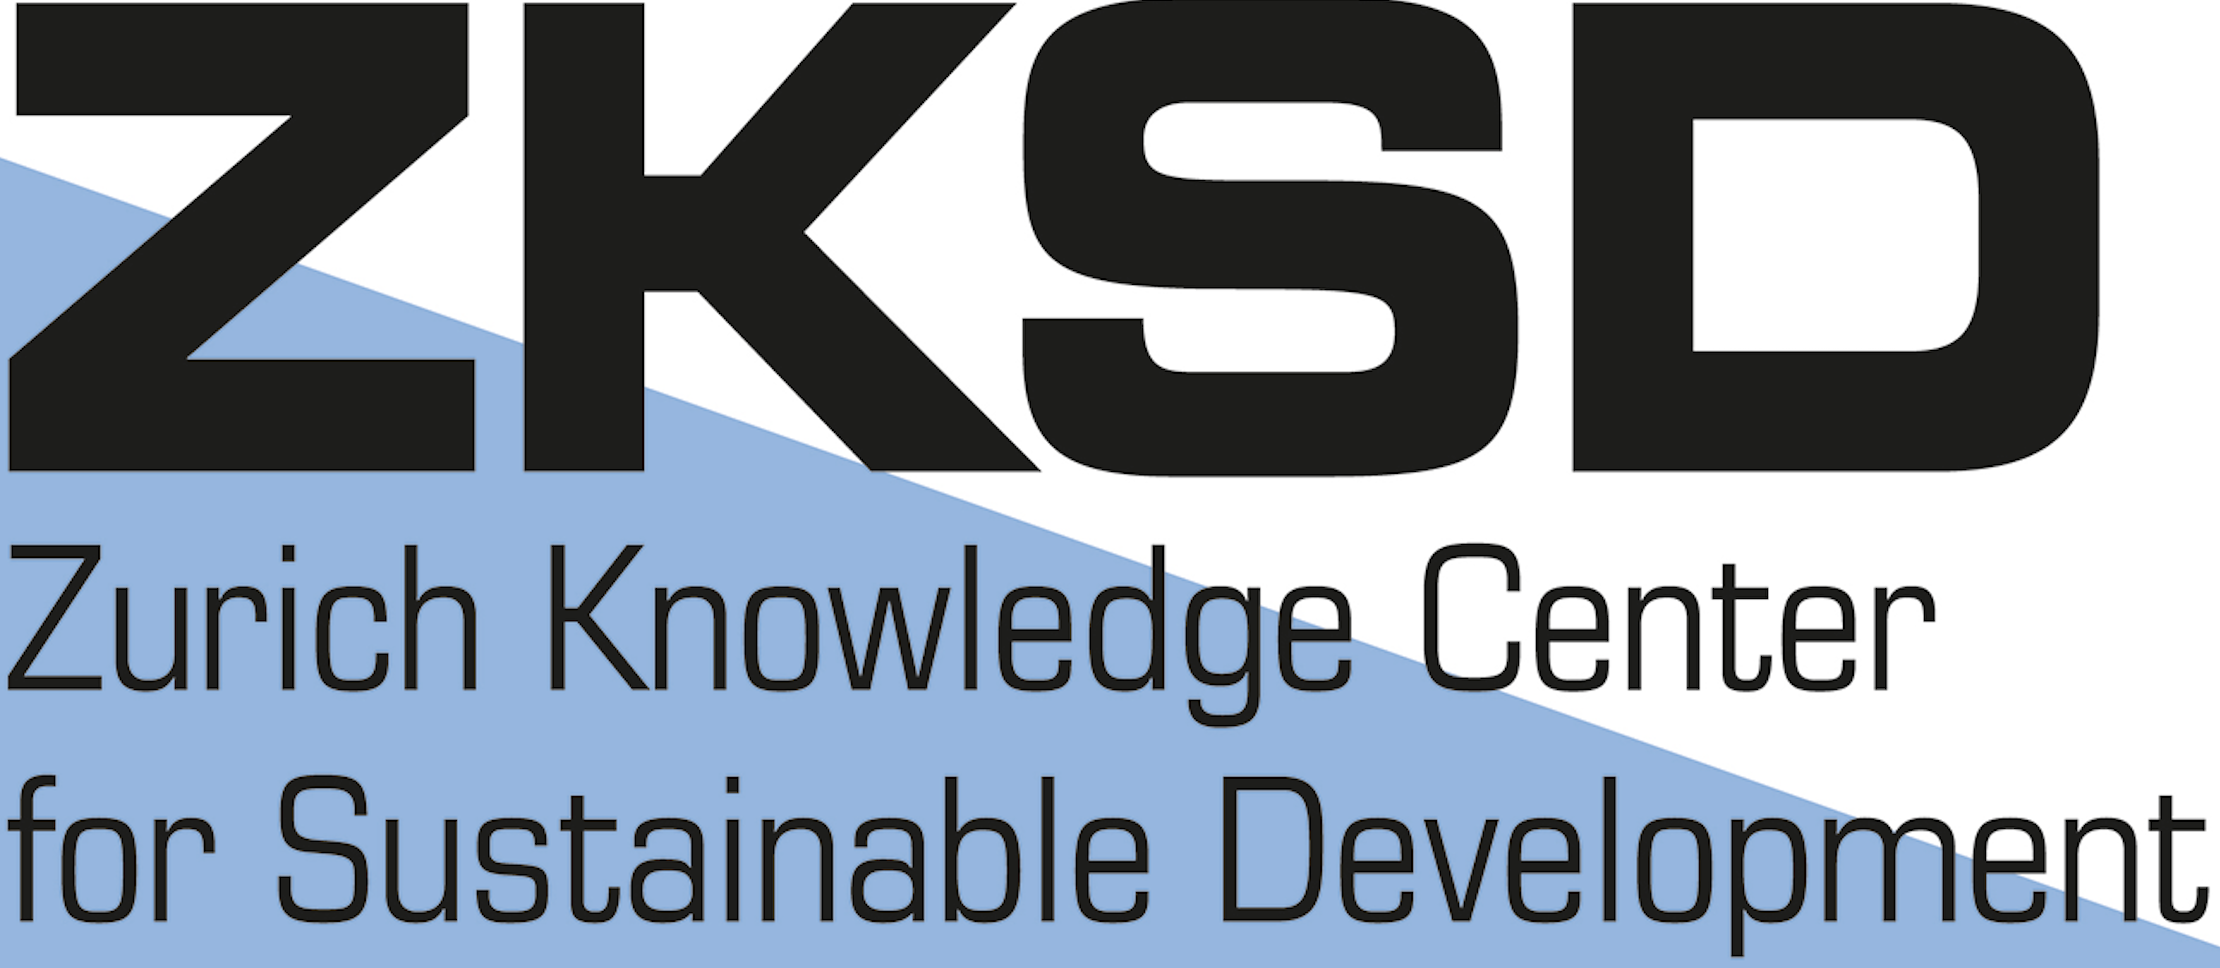 Logo ZKSD